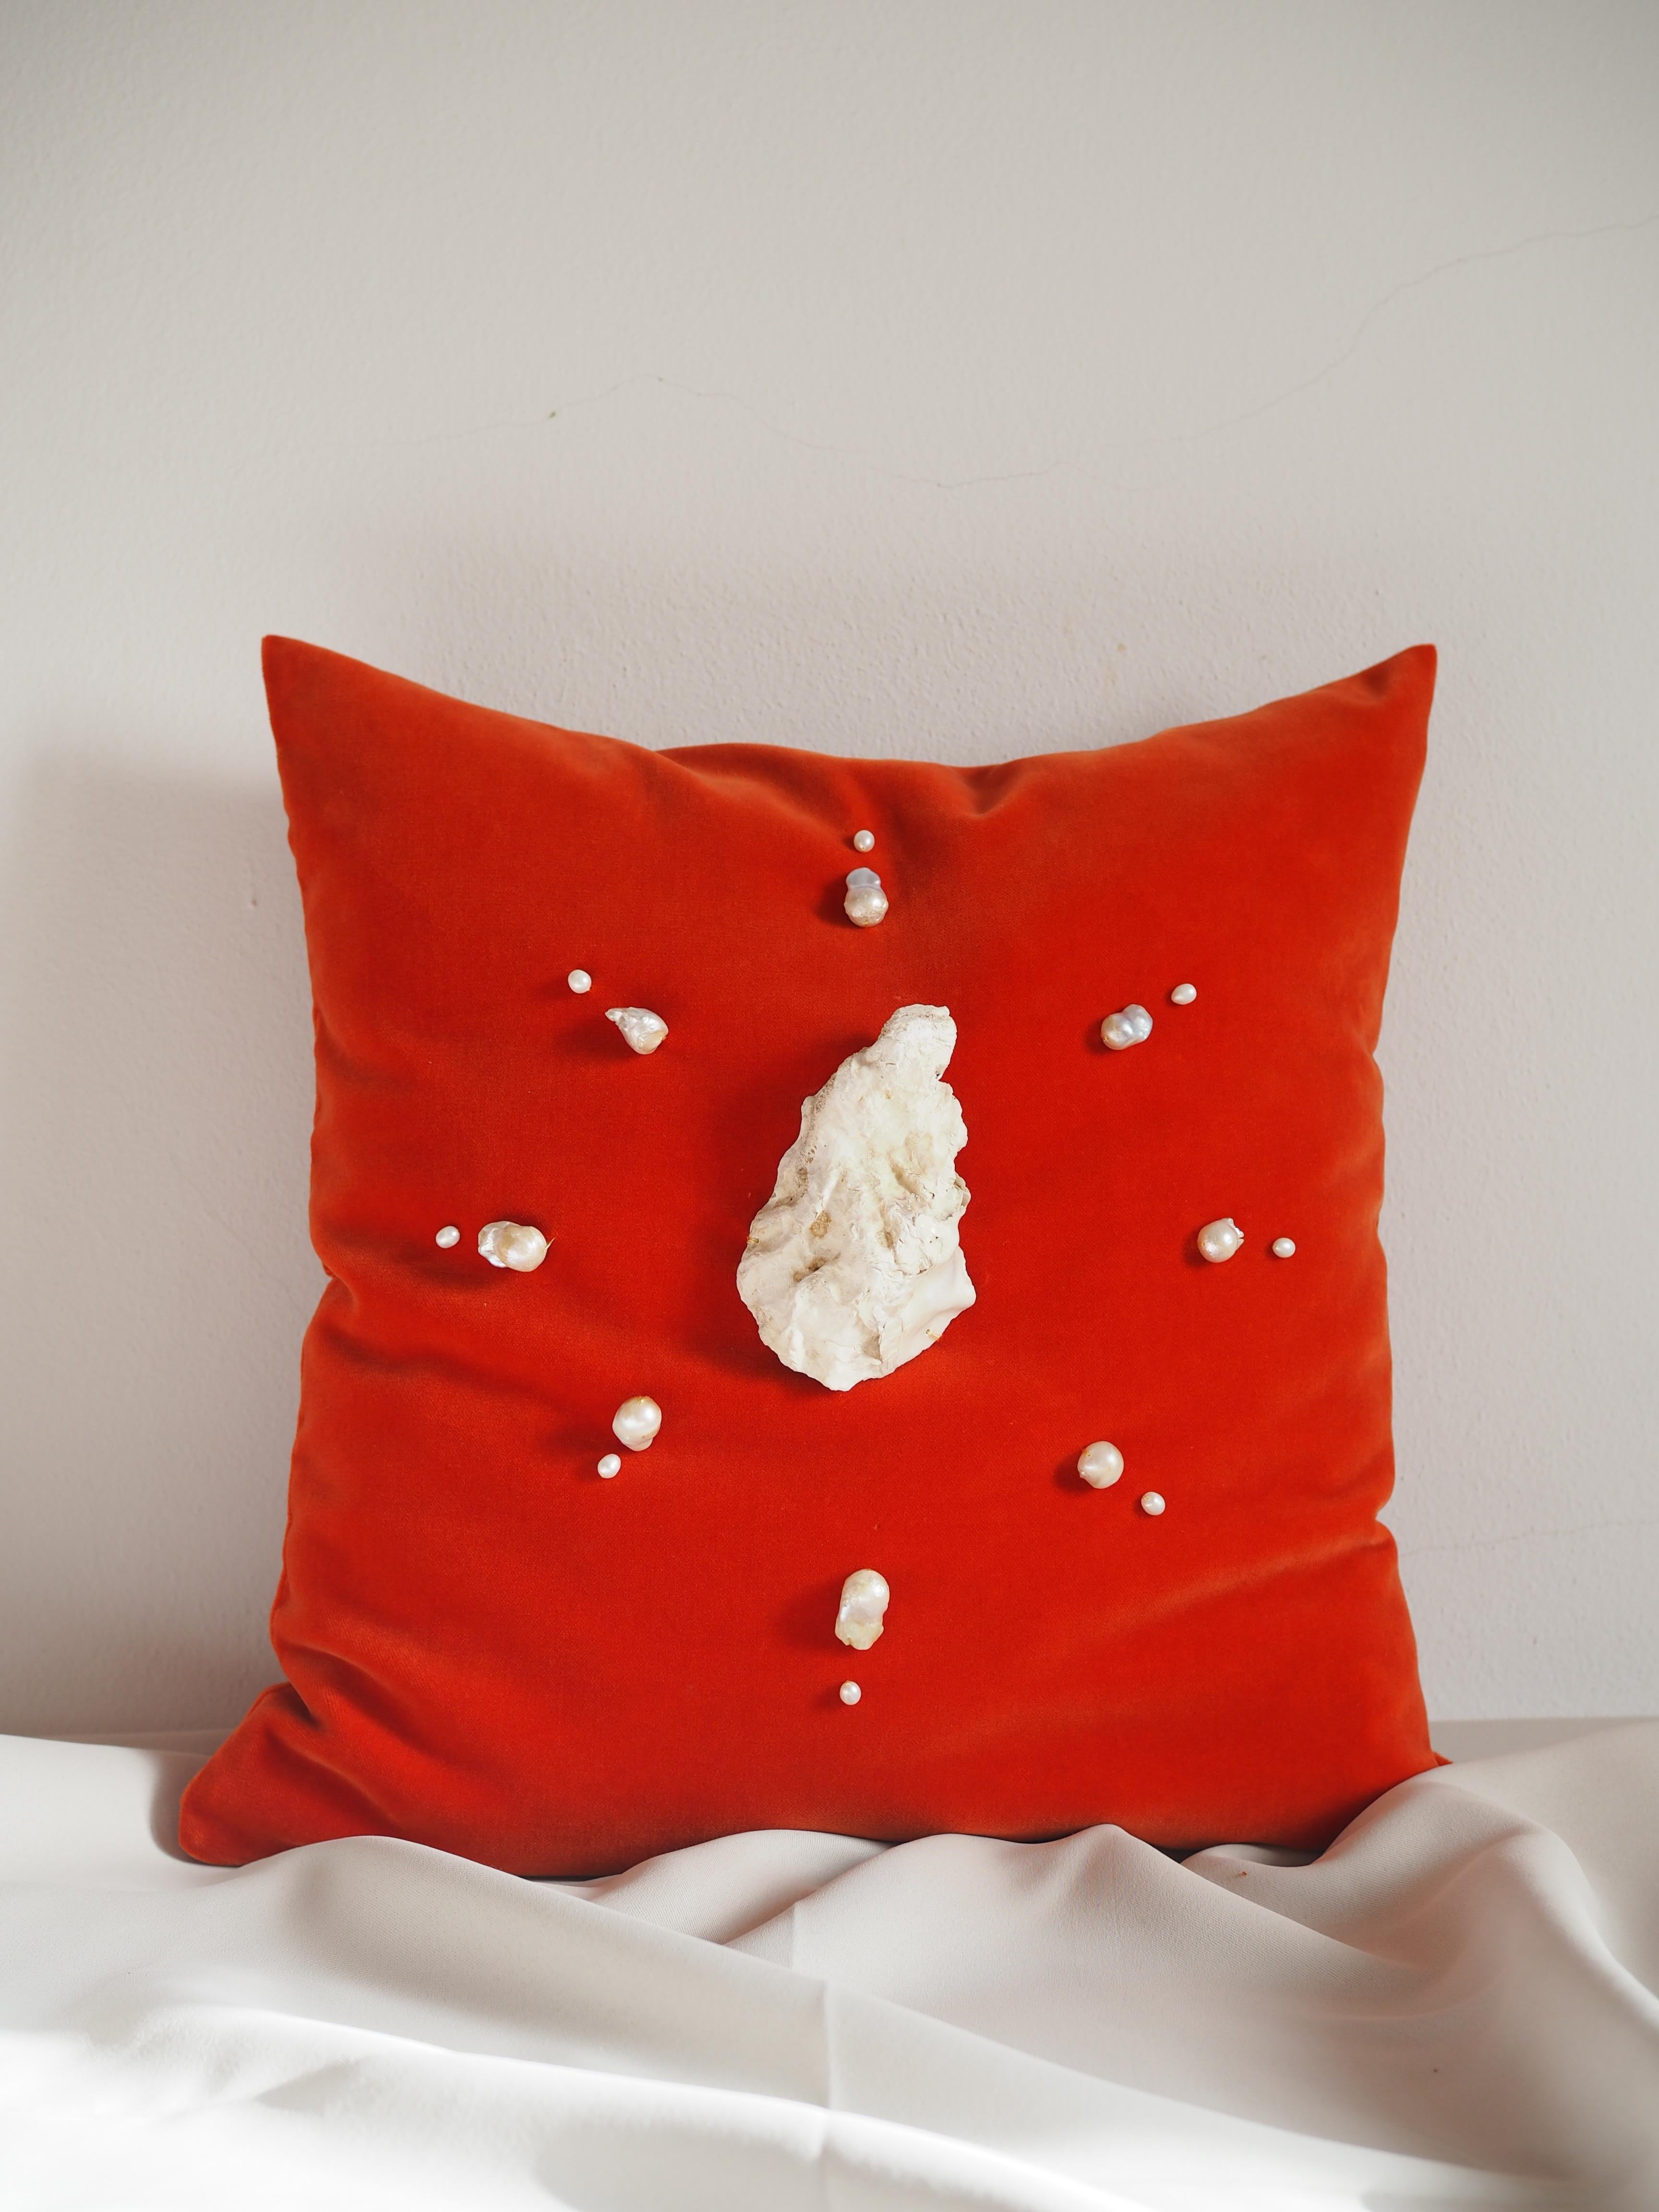 Spanish Bon Appetit 006 Decorative Cushion Culto Ponsoda 21st century desingn For Sale